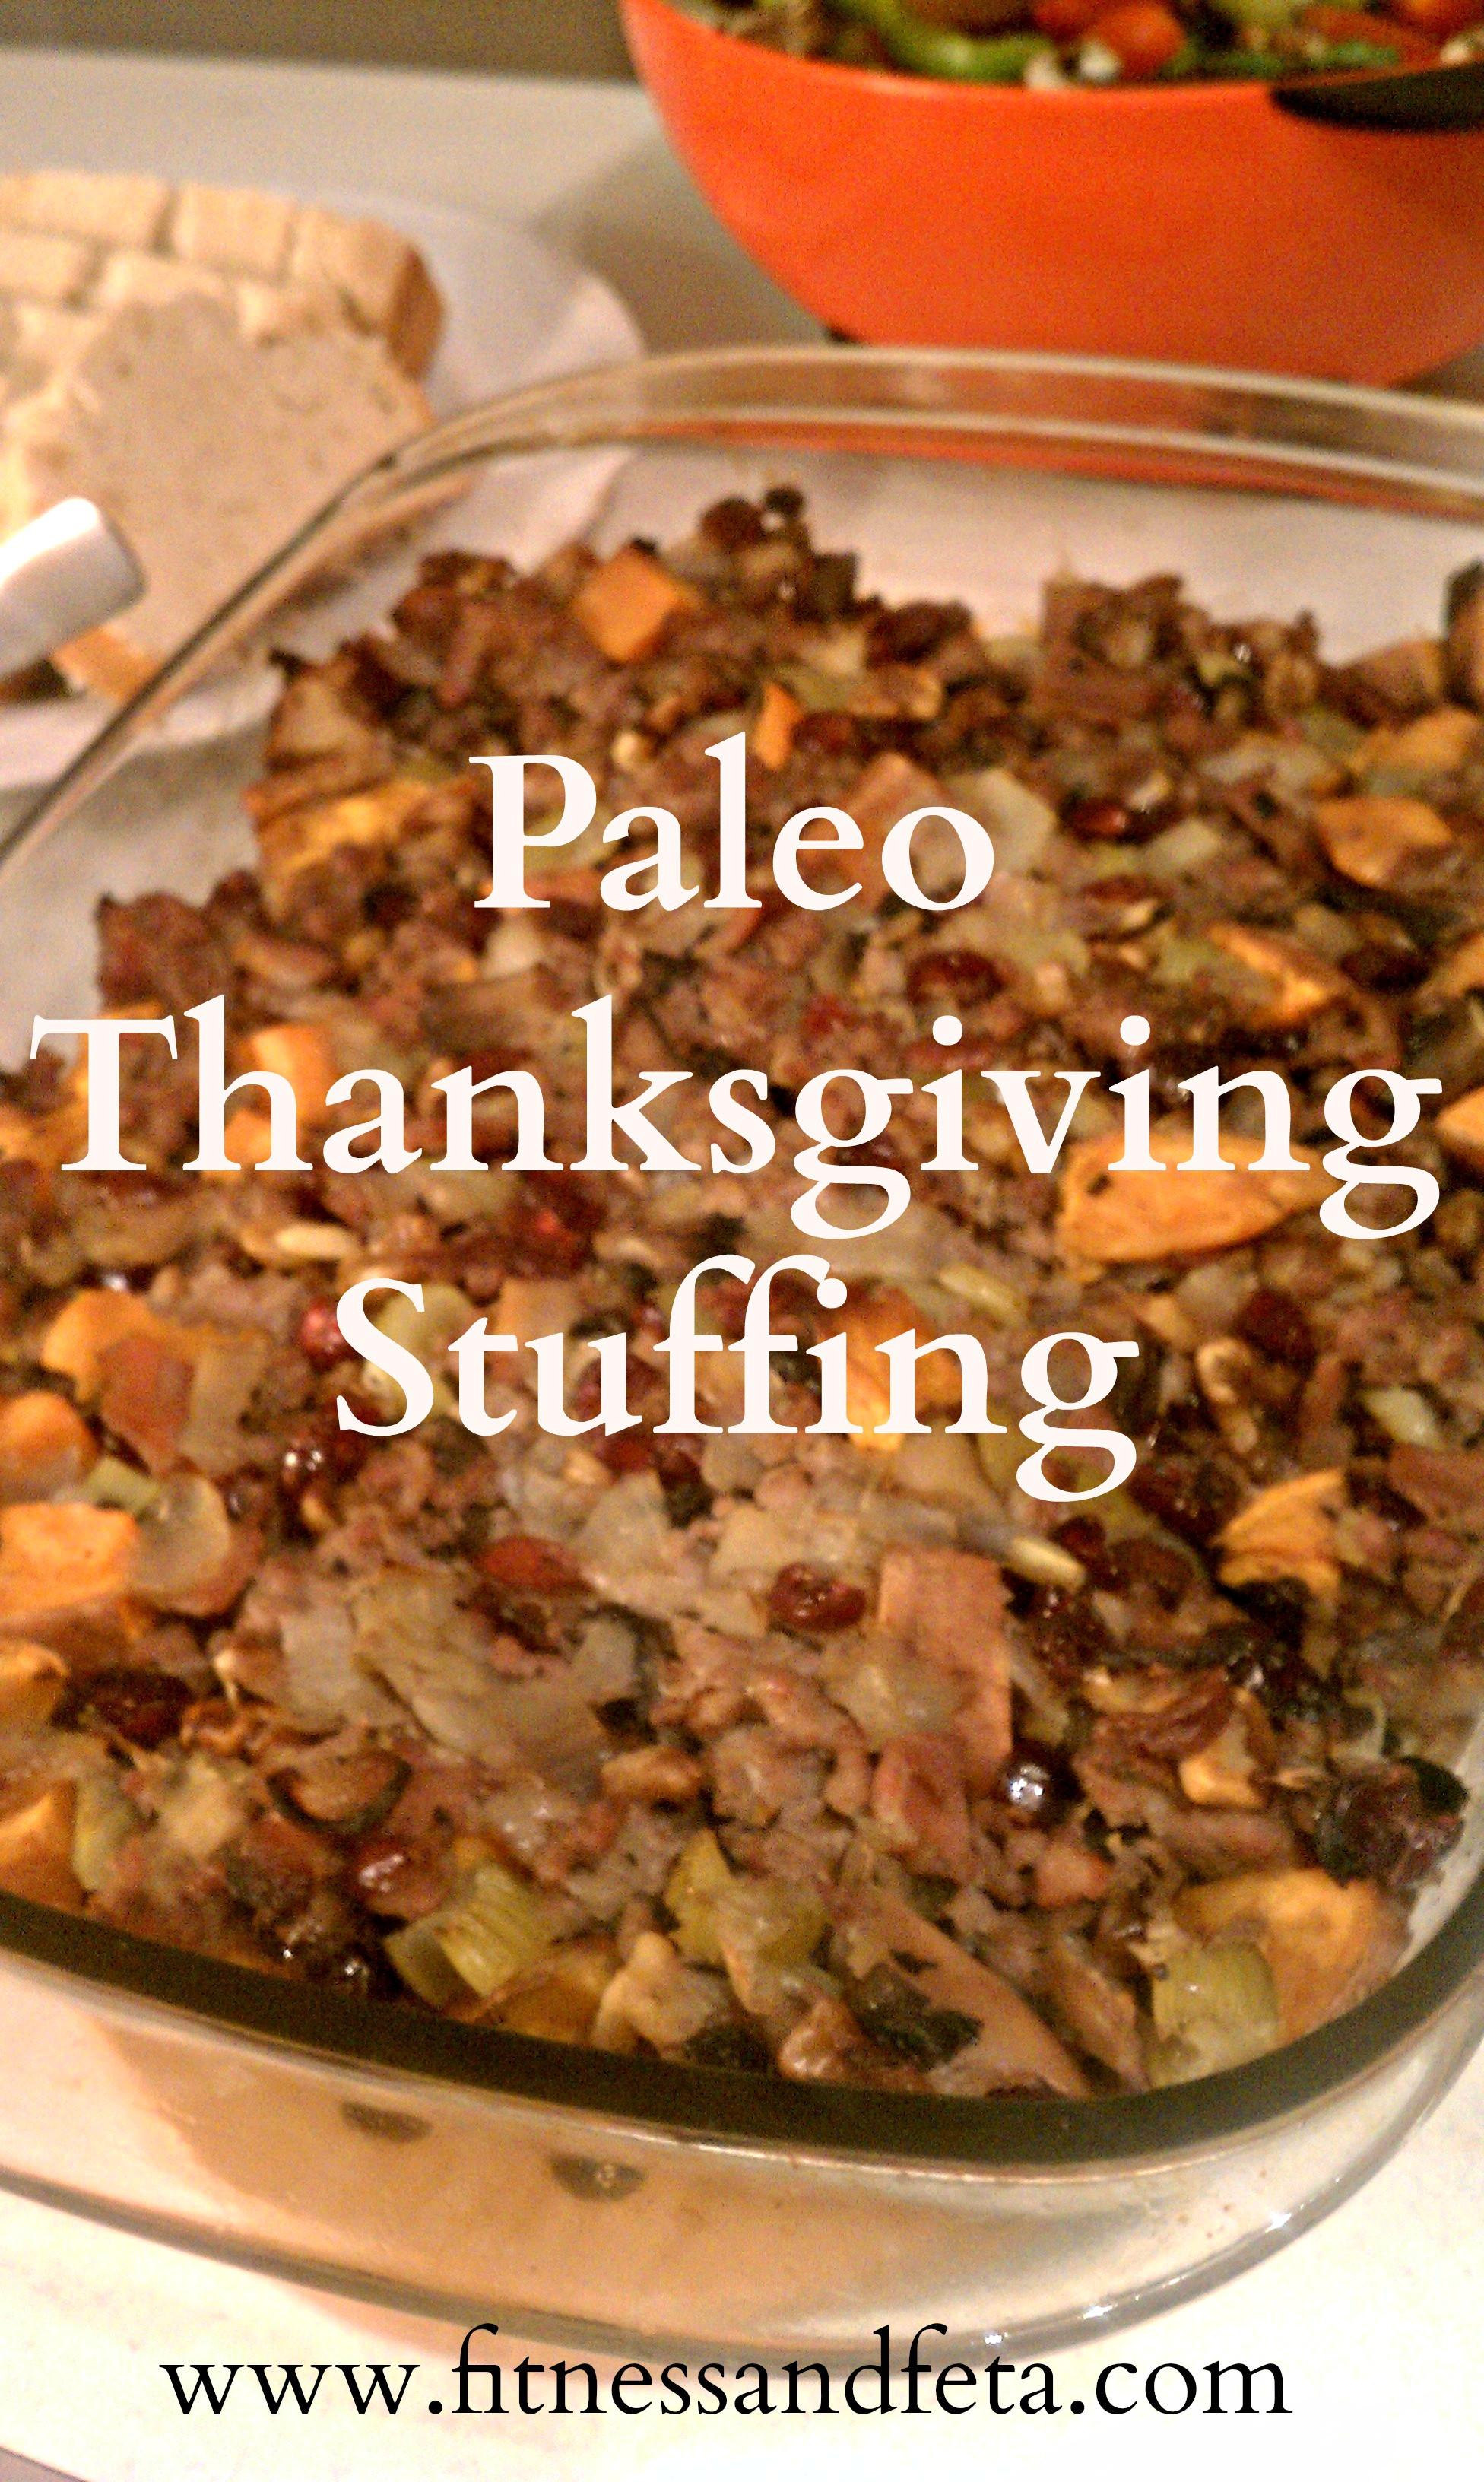 Paleo Thanksgiving Turkey
 Paleo Thanksgiving Stuffing